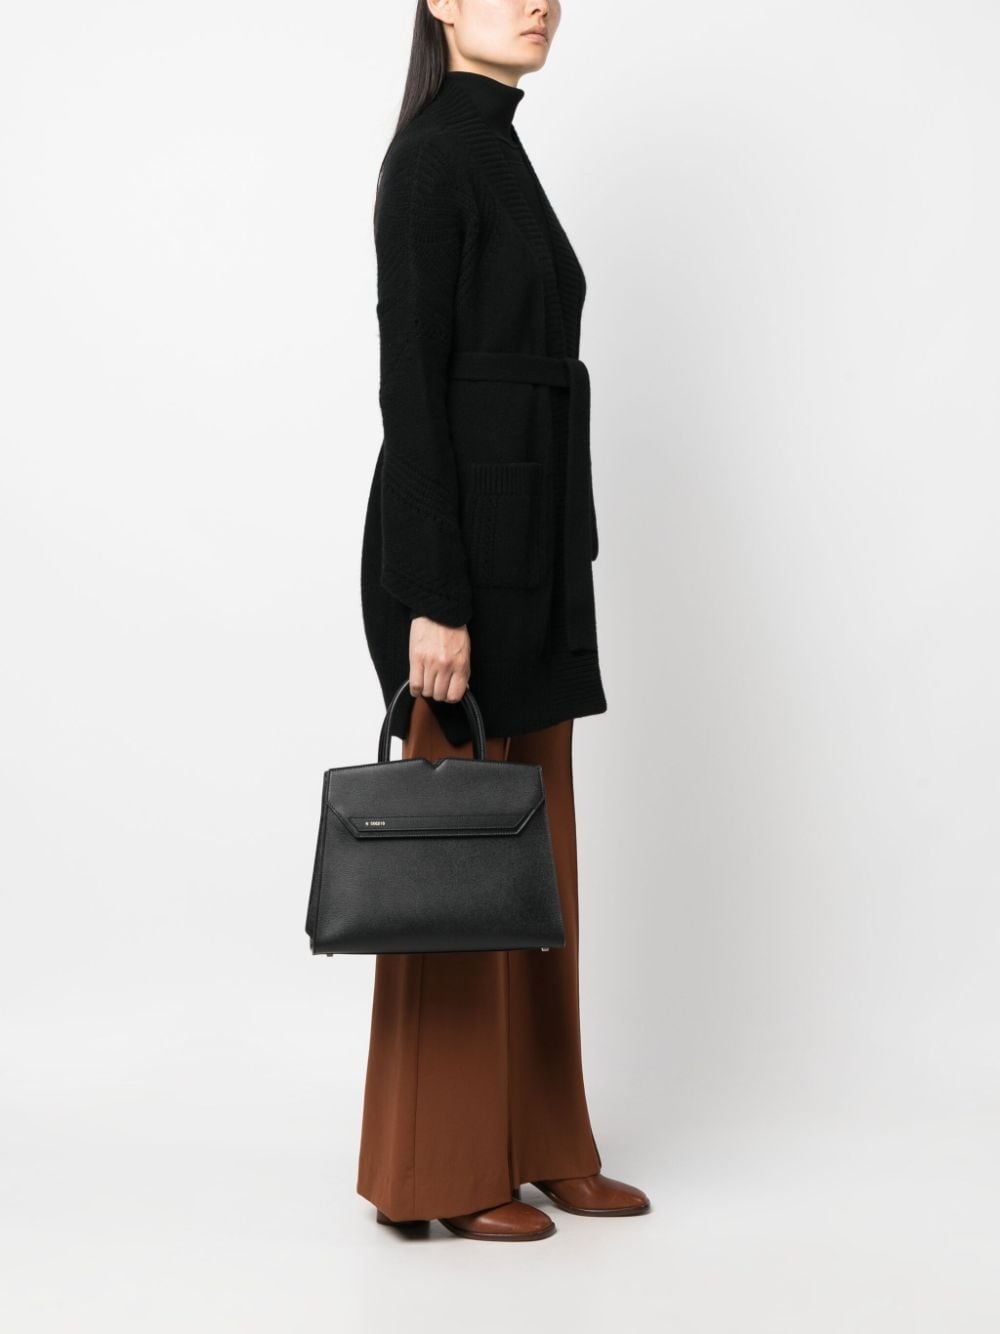 flap structured handbag - 2